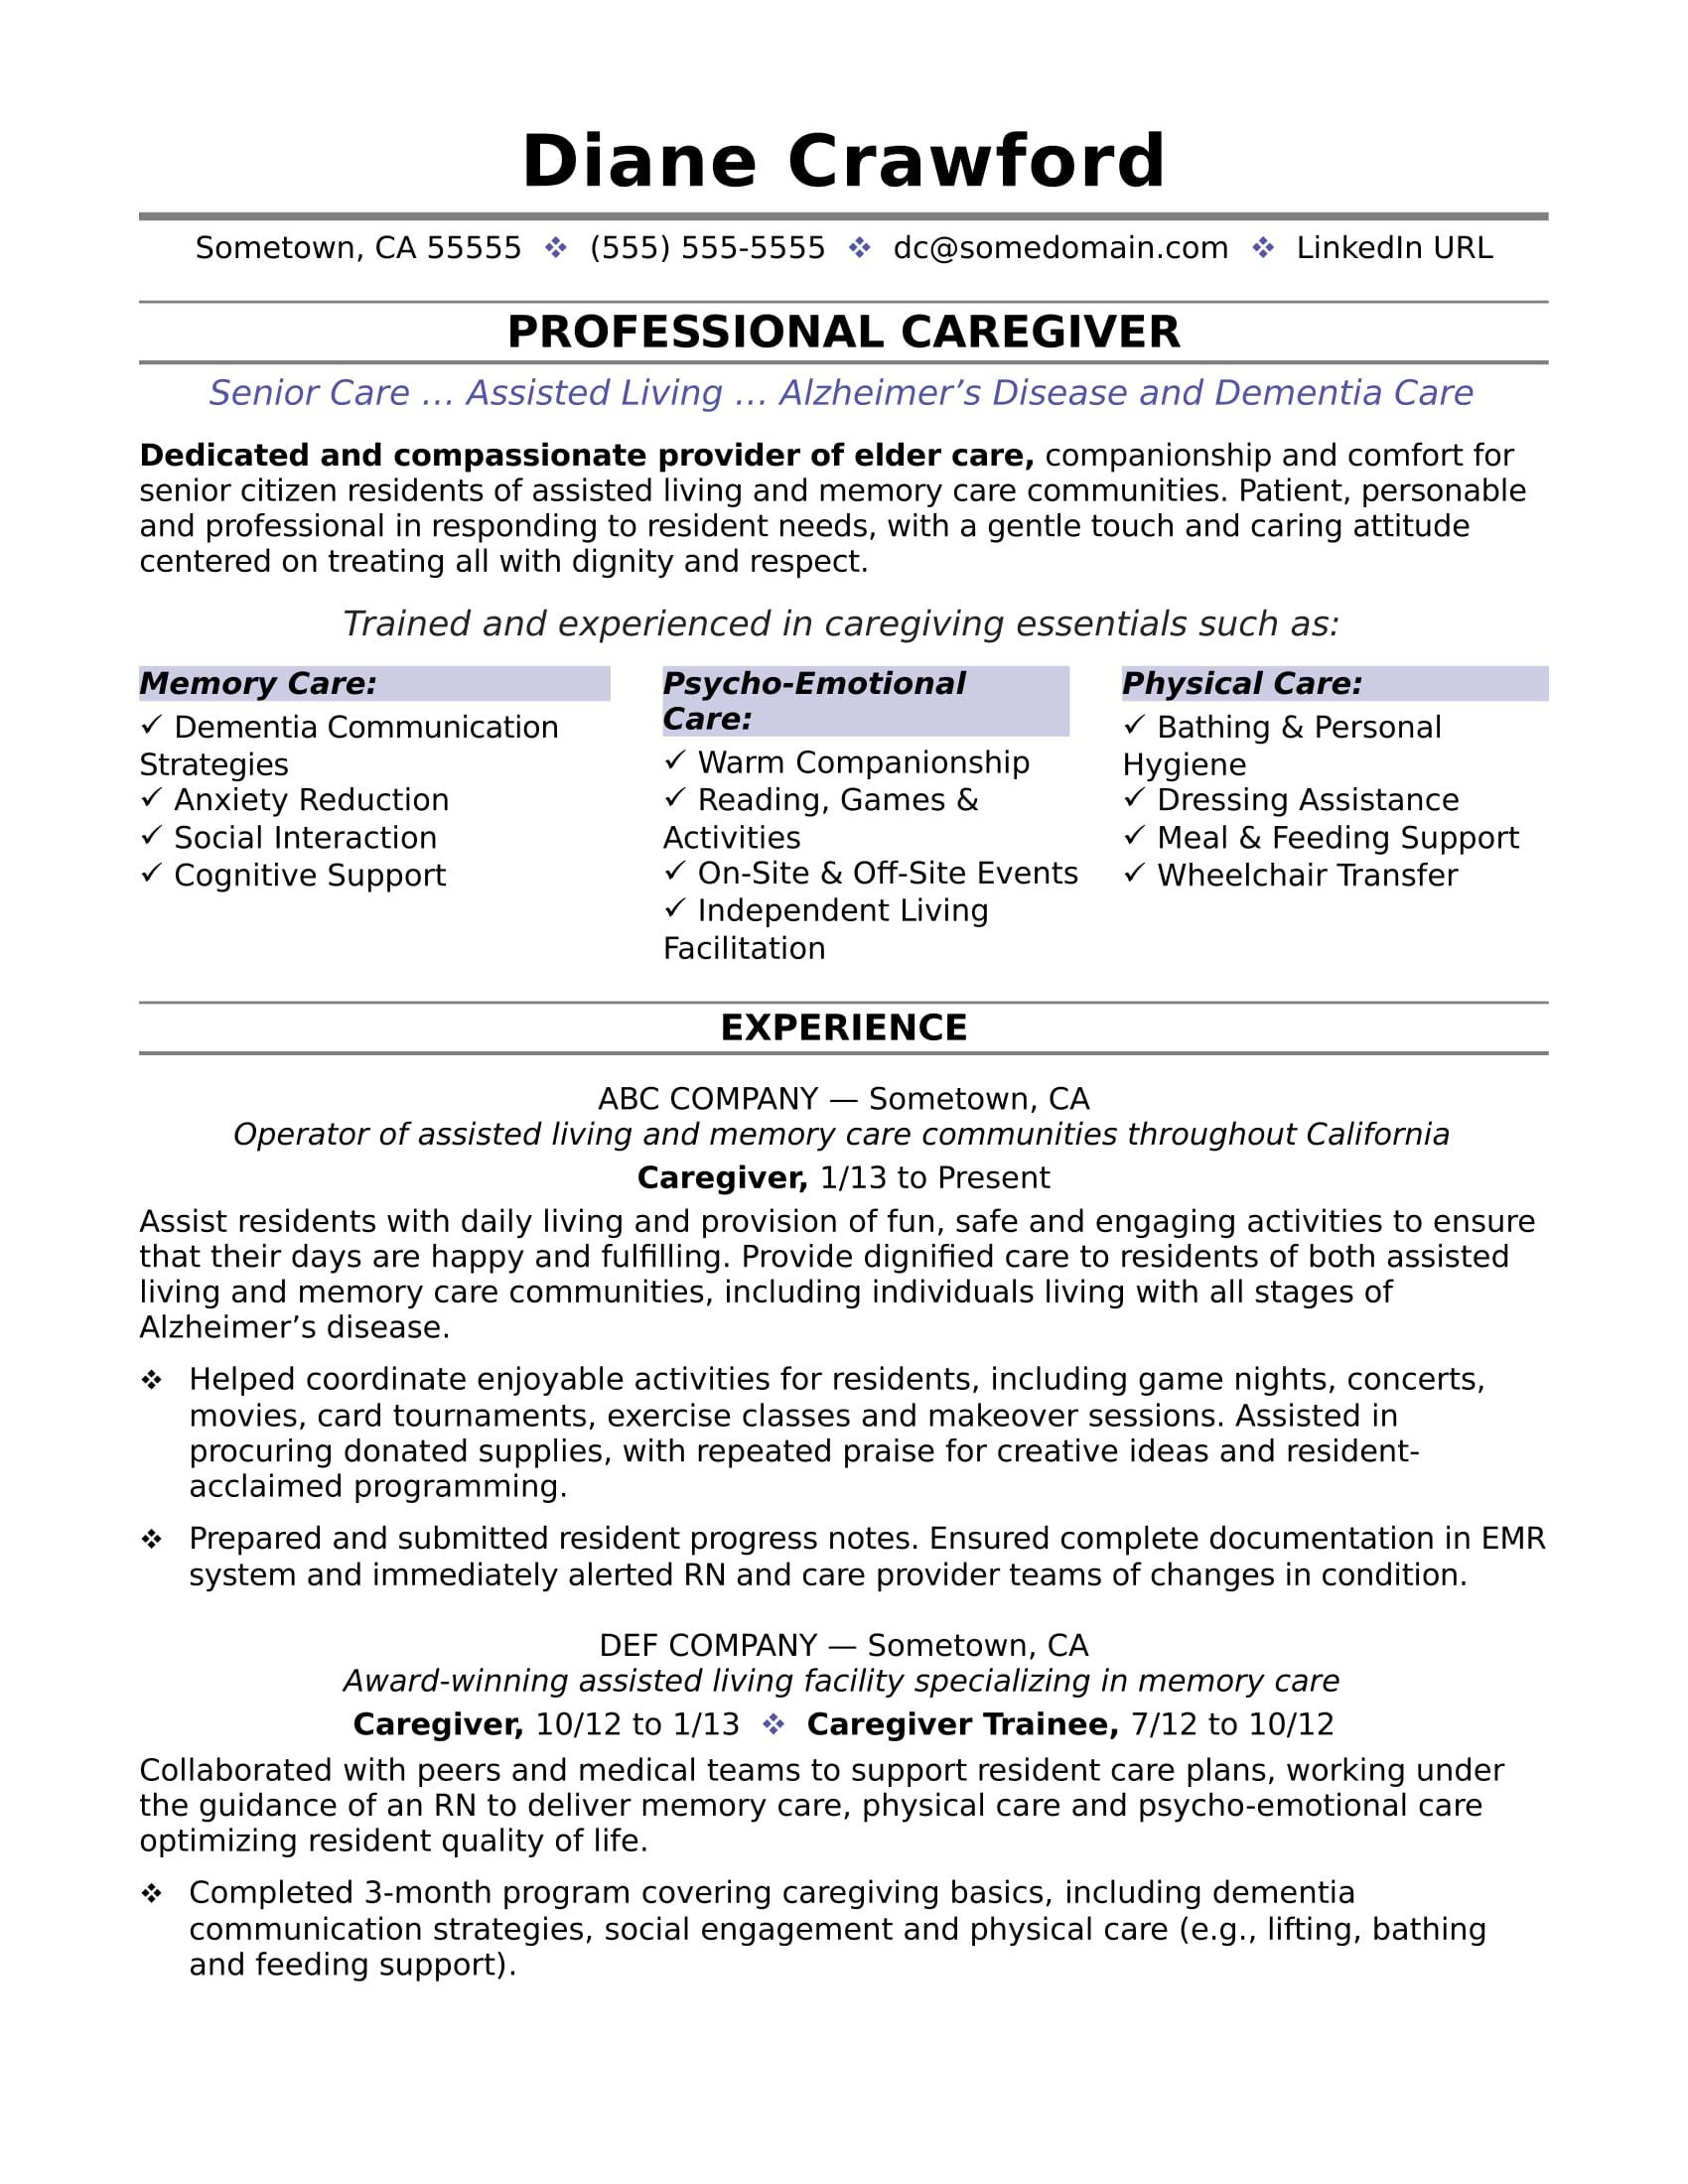 Sample Resume for Caregiver without Experience Caregiver Resume Sample Monster.com